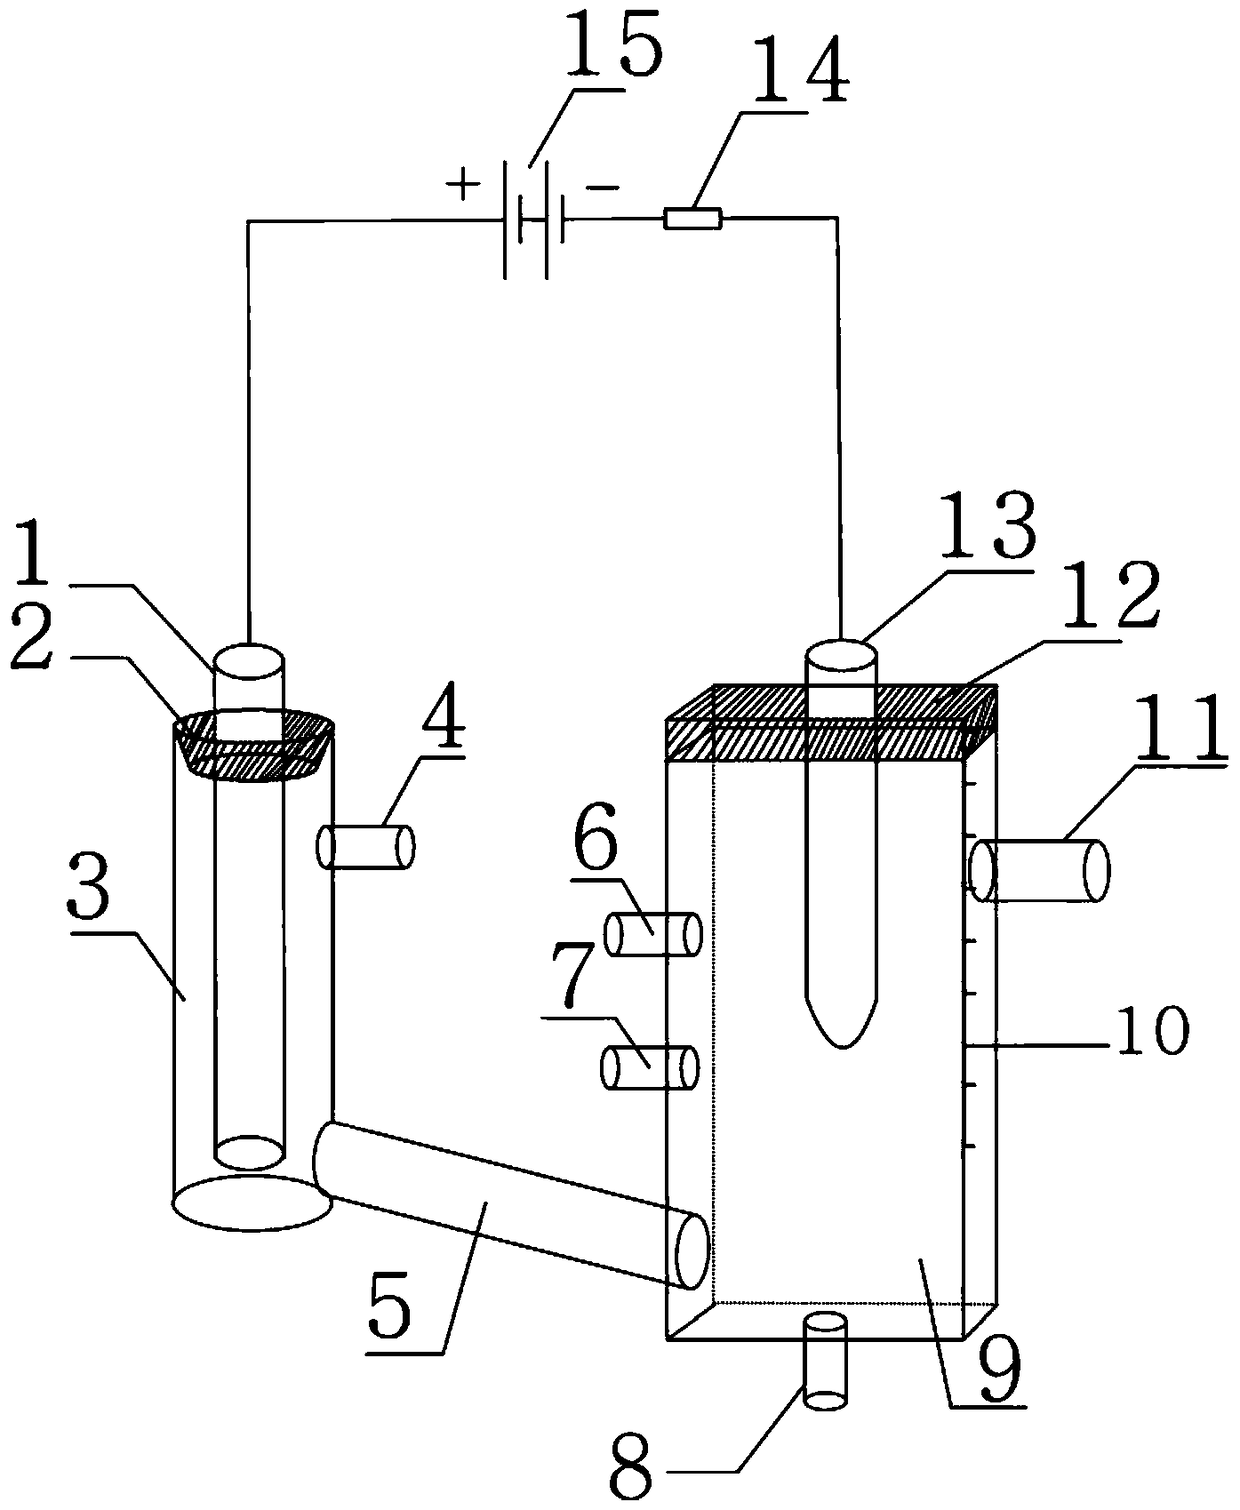 A liquid discharge micro-plasma excitation source device and plasma excitation method